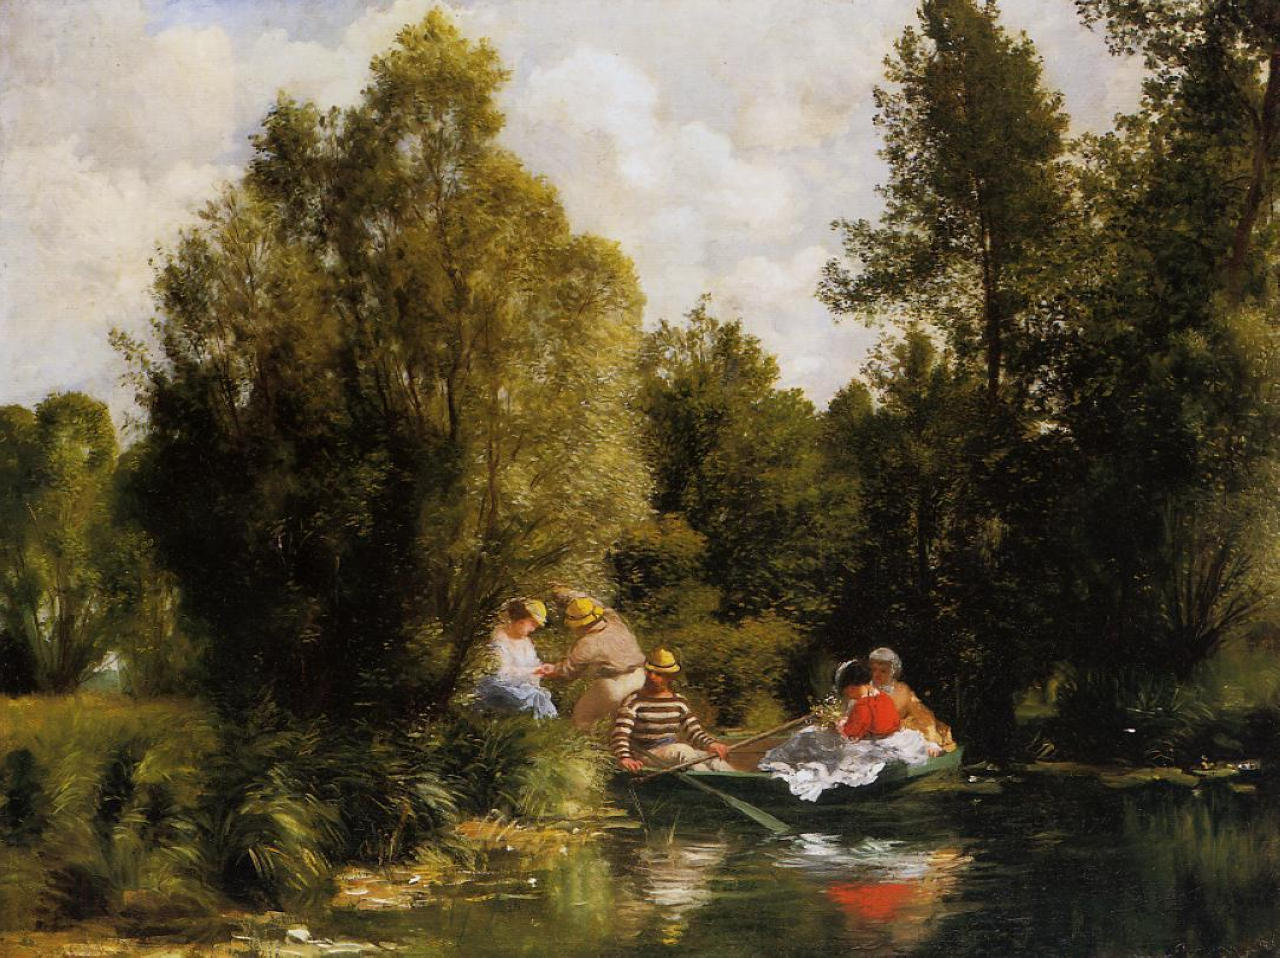 The Fairies Pond - Pierre-Auguste Renoir painting on canvas